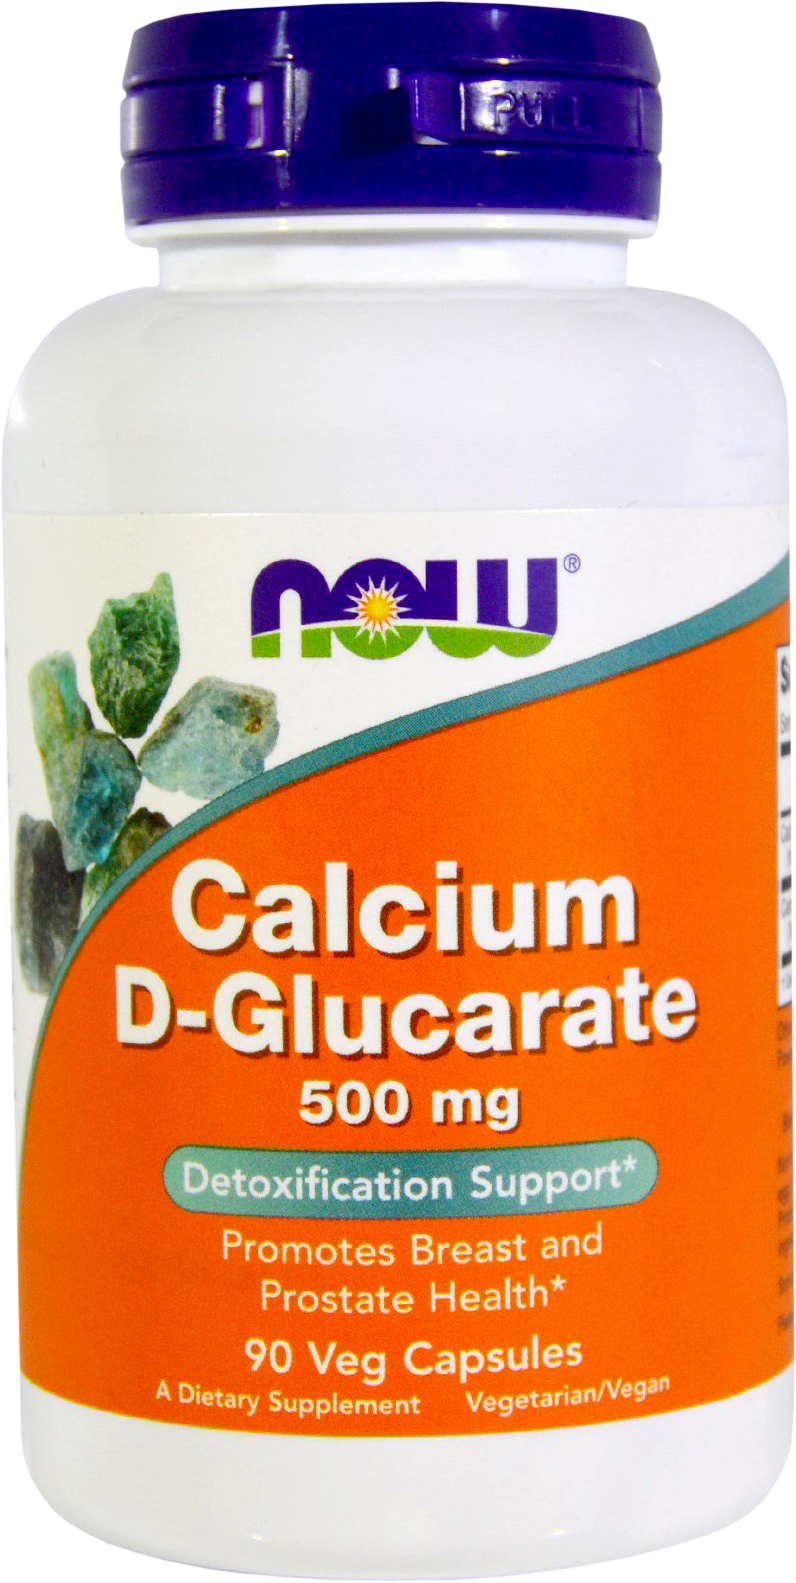 Calcium D-Glucarate 500 mg - BadiZdrav.BG